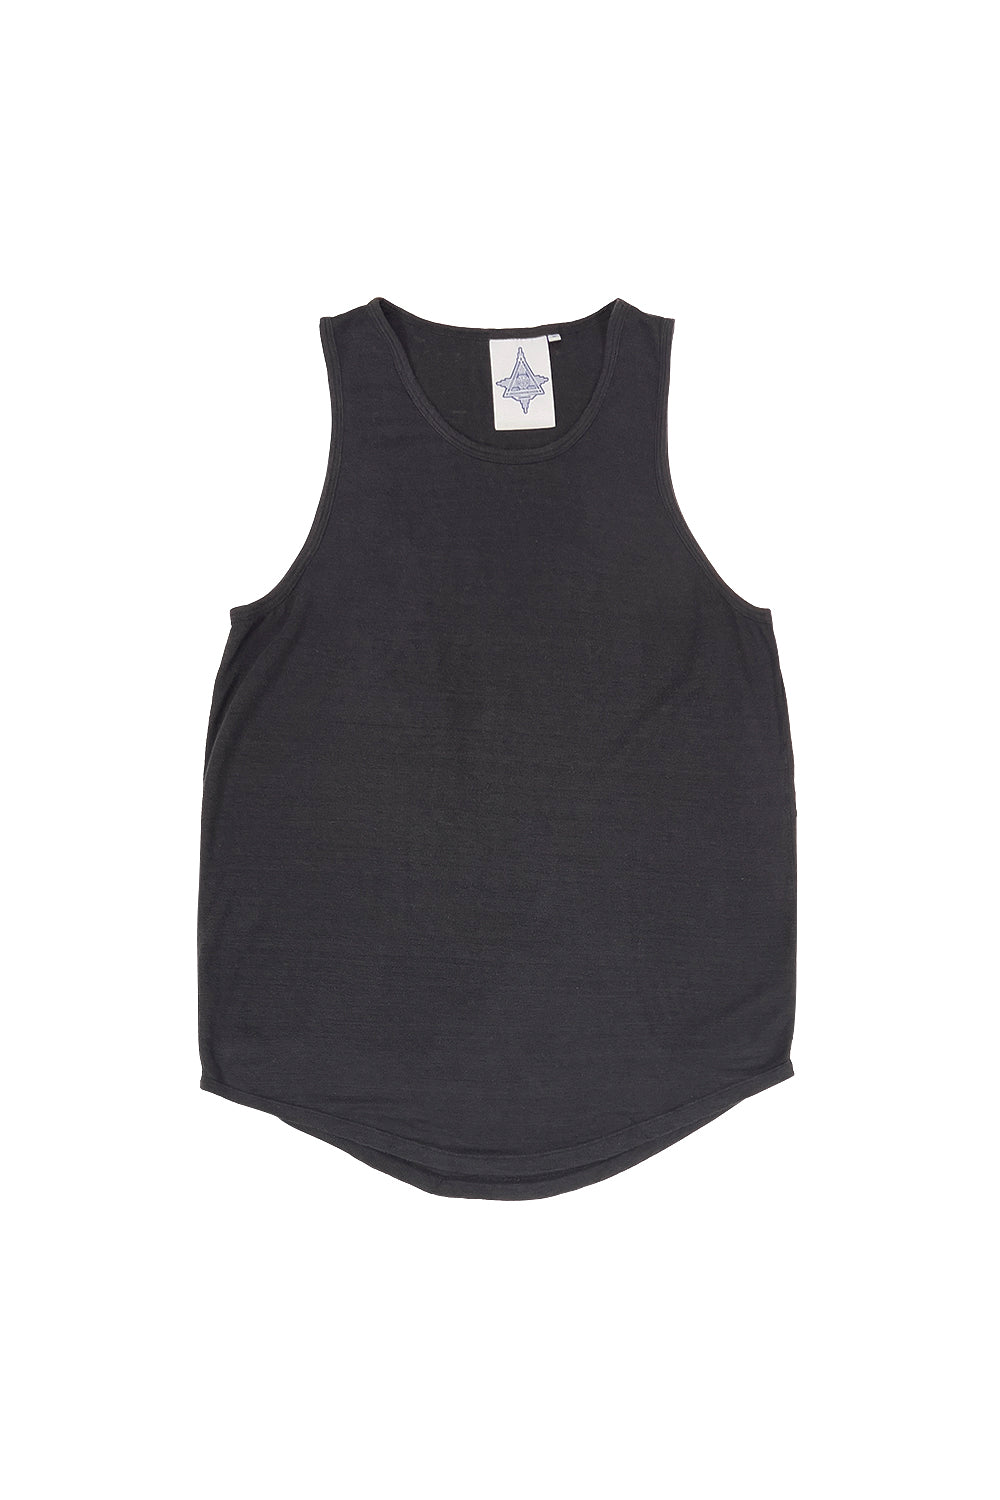 Playa 100% Tank Top | Jungmaven Hemp Clothing & Accessories / Color: Black